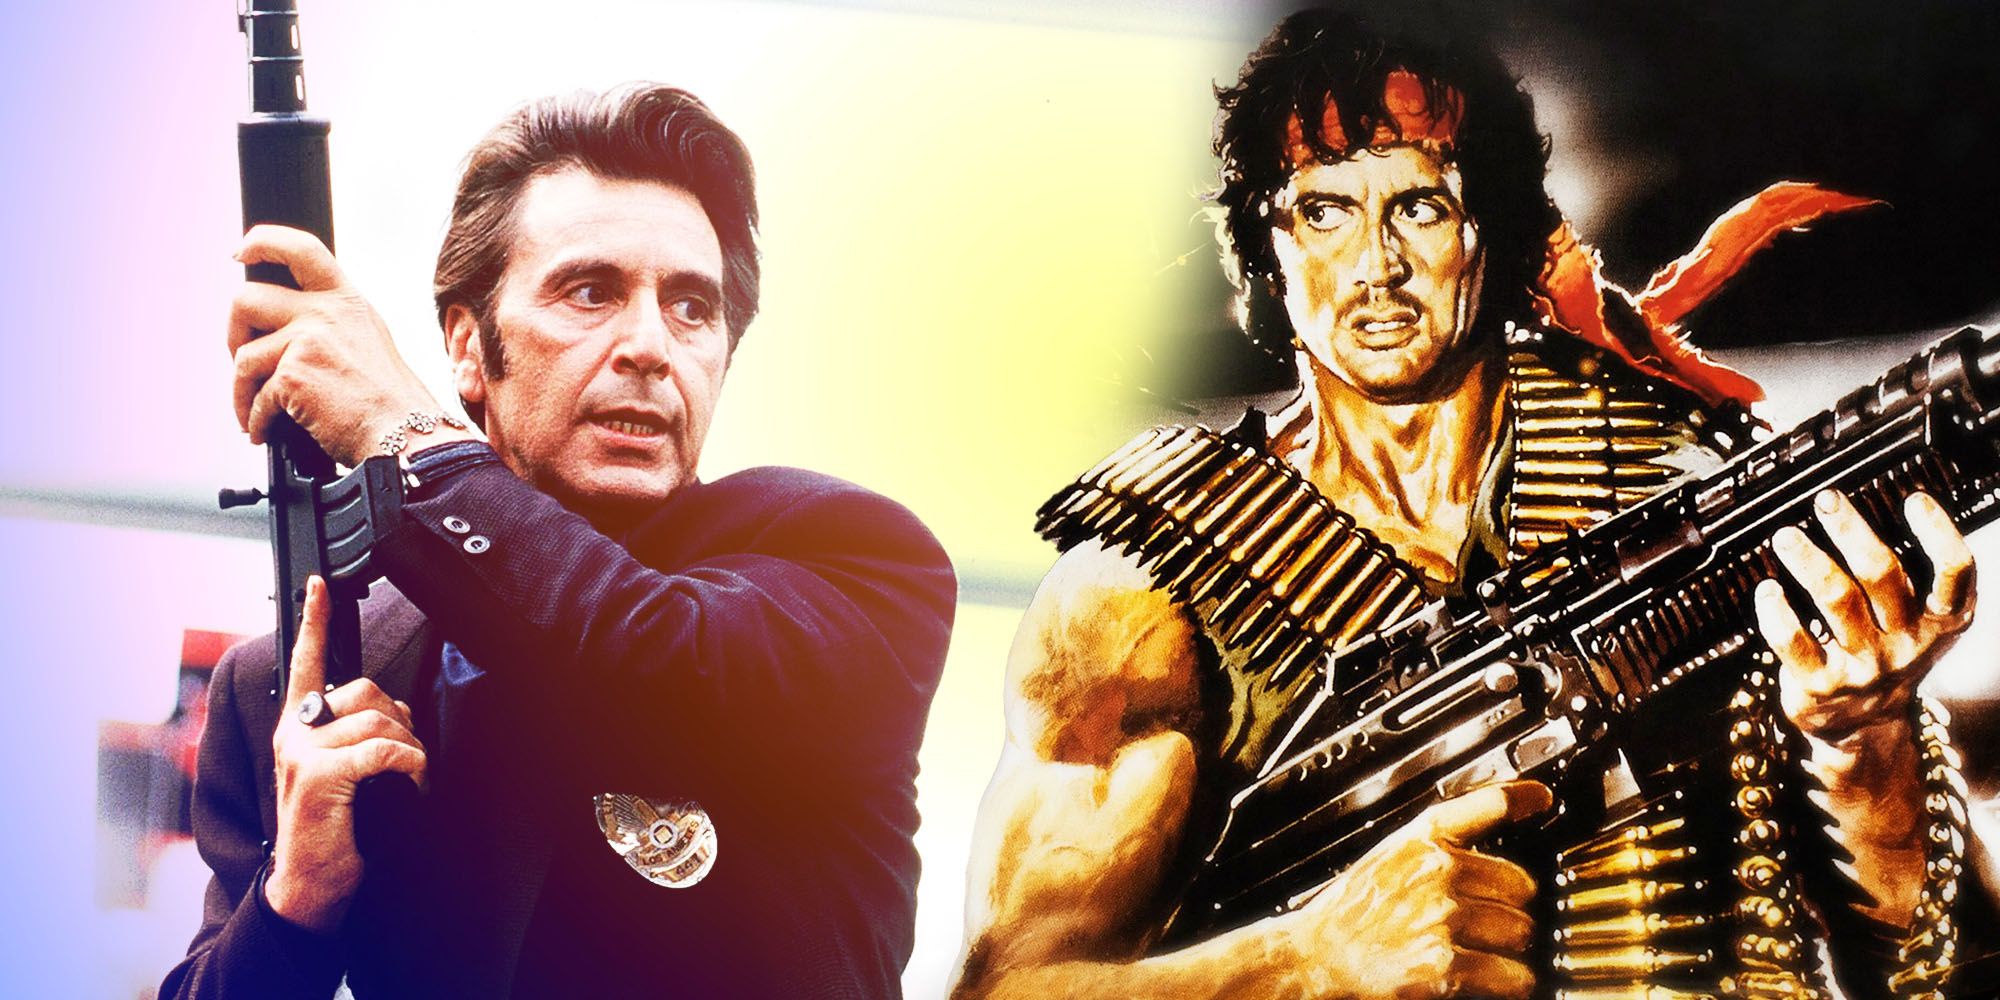 Al Pacino and Sylvester Stallone as Rambo